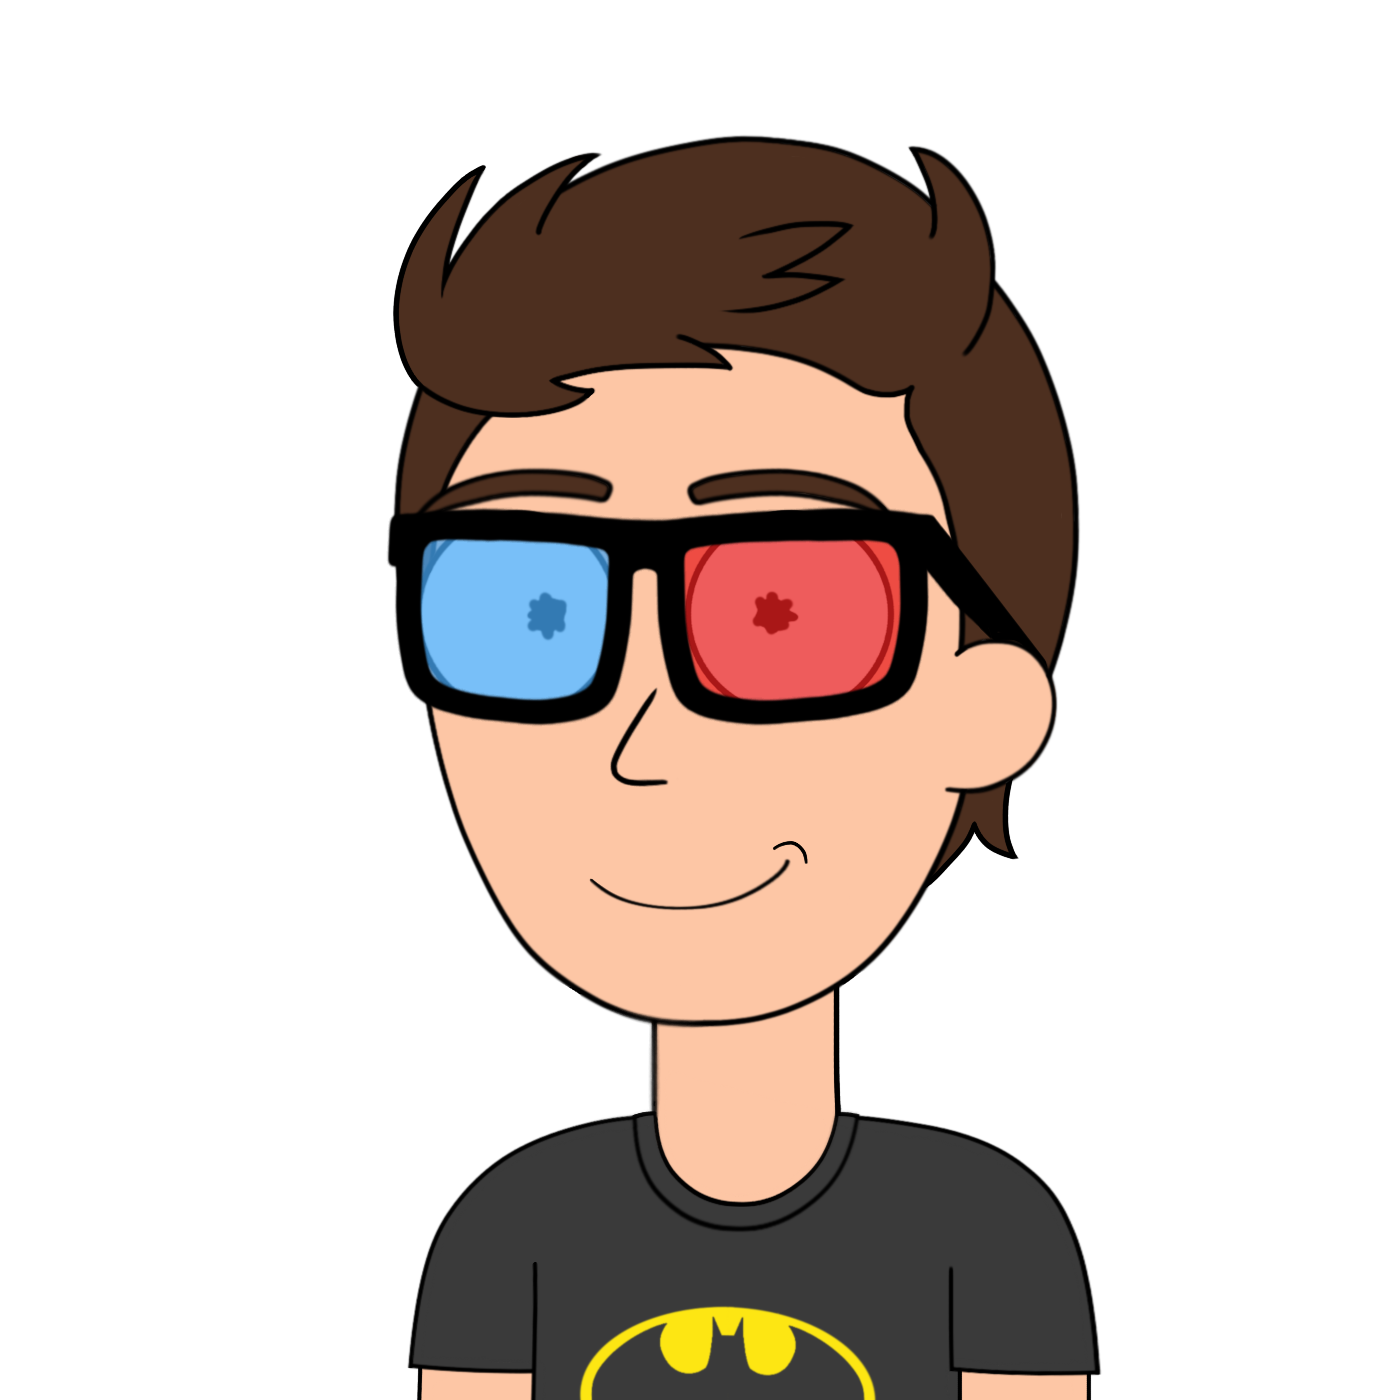 GitHub profile picture